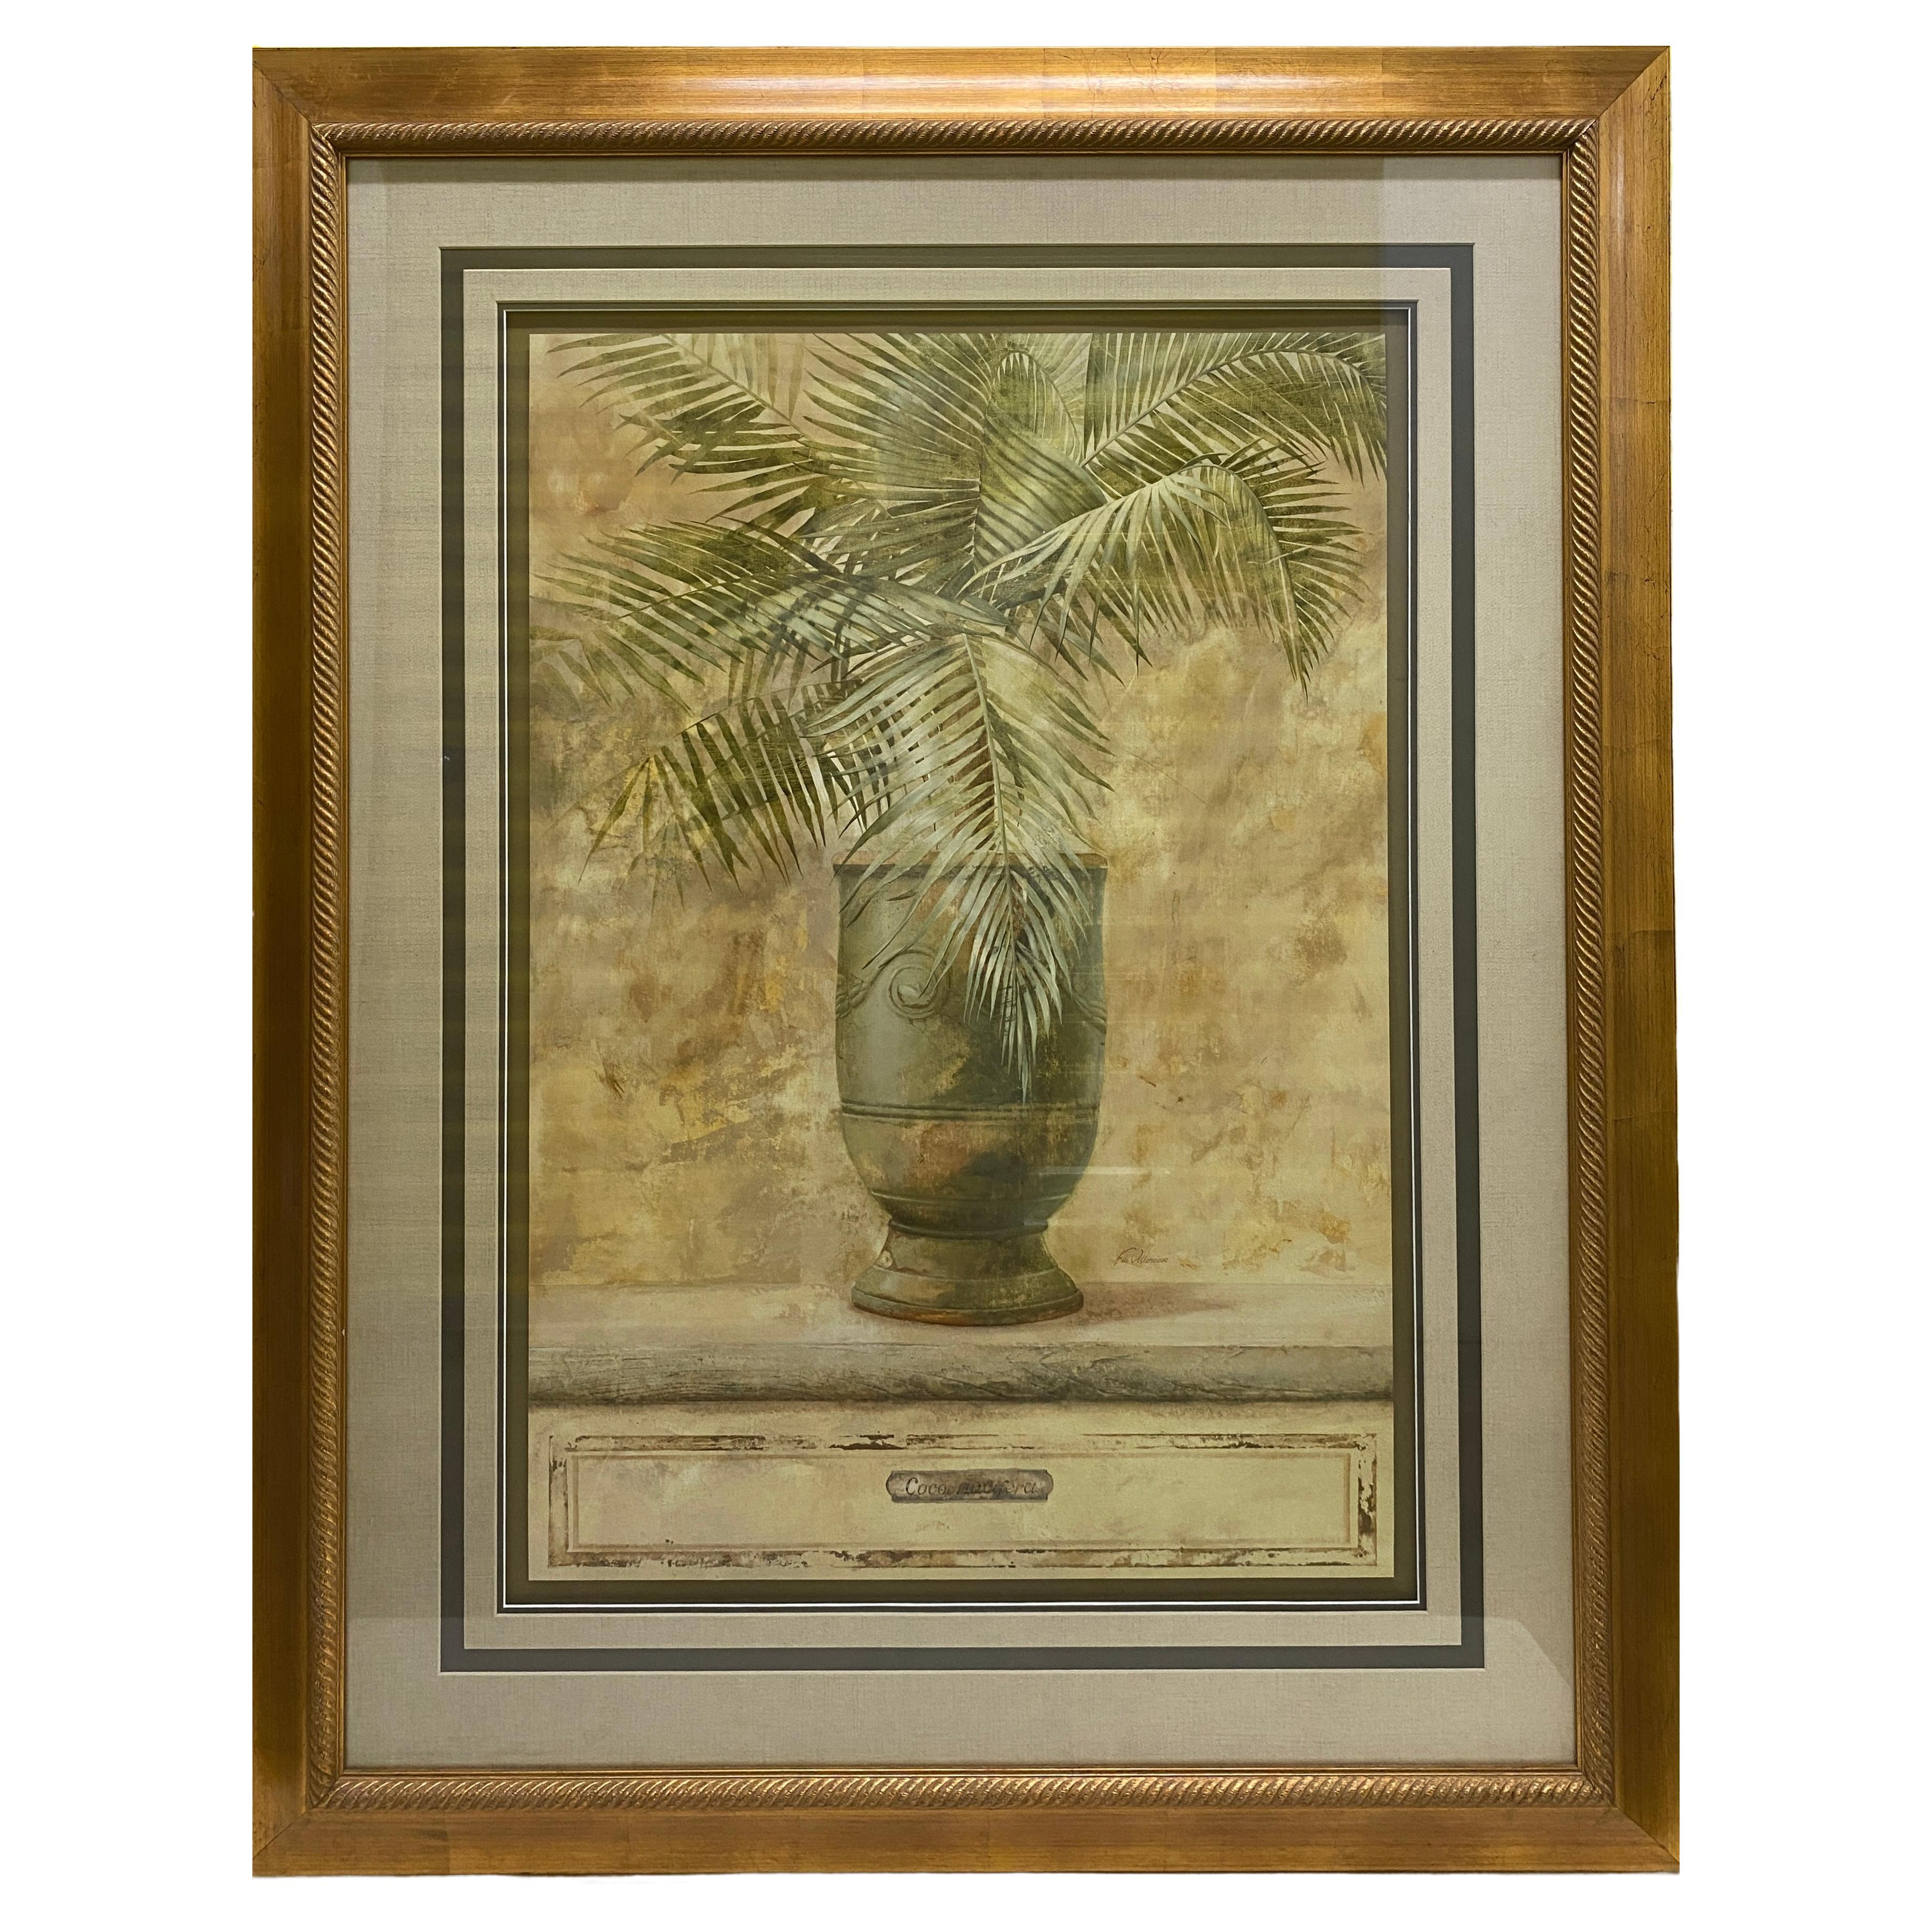  Large Botanical Art Print in Custom Giltwood Frame 